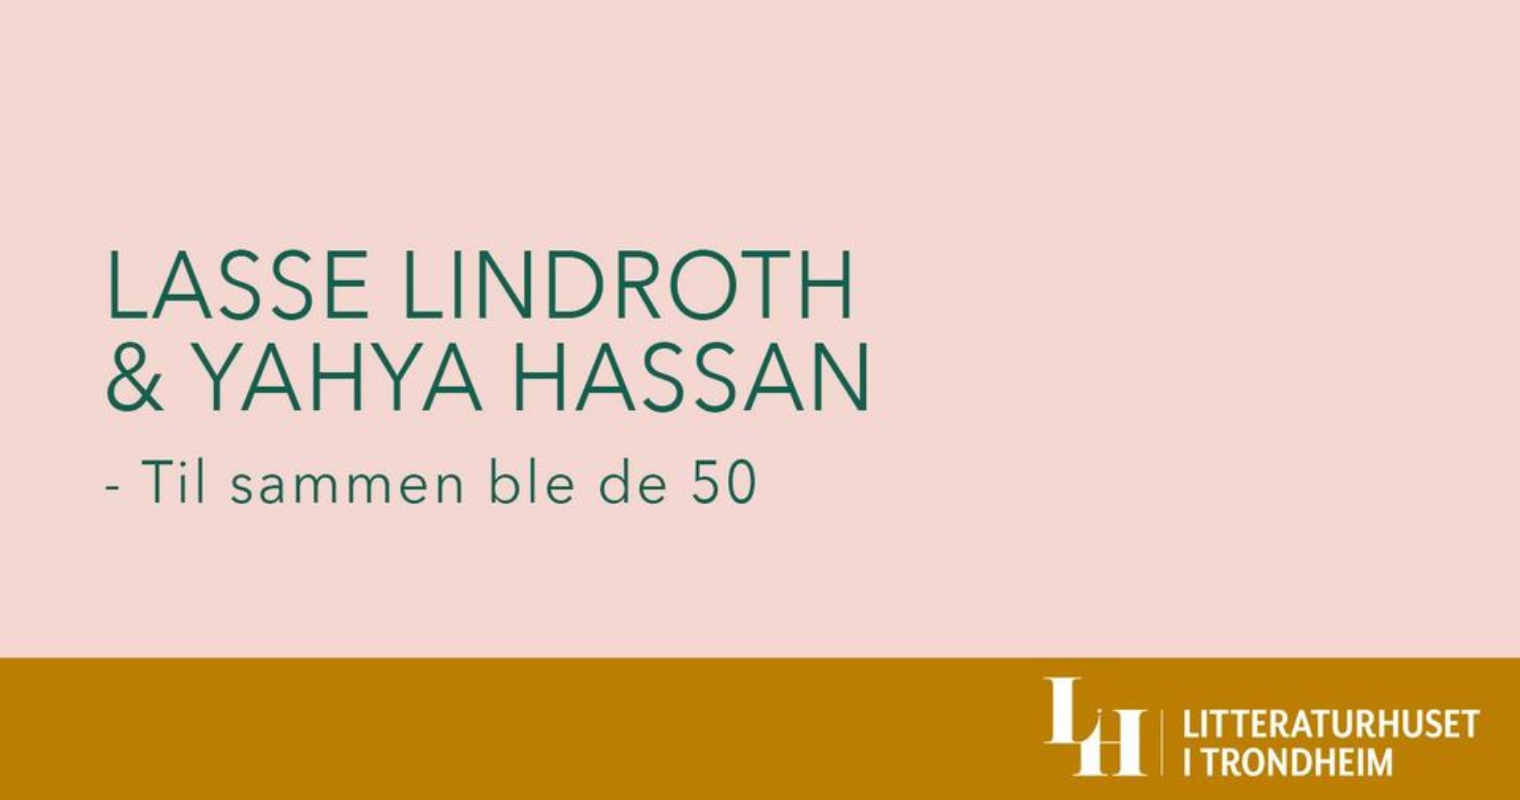 Lasse Lindroth og Yahya Hassan